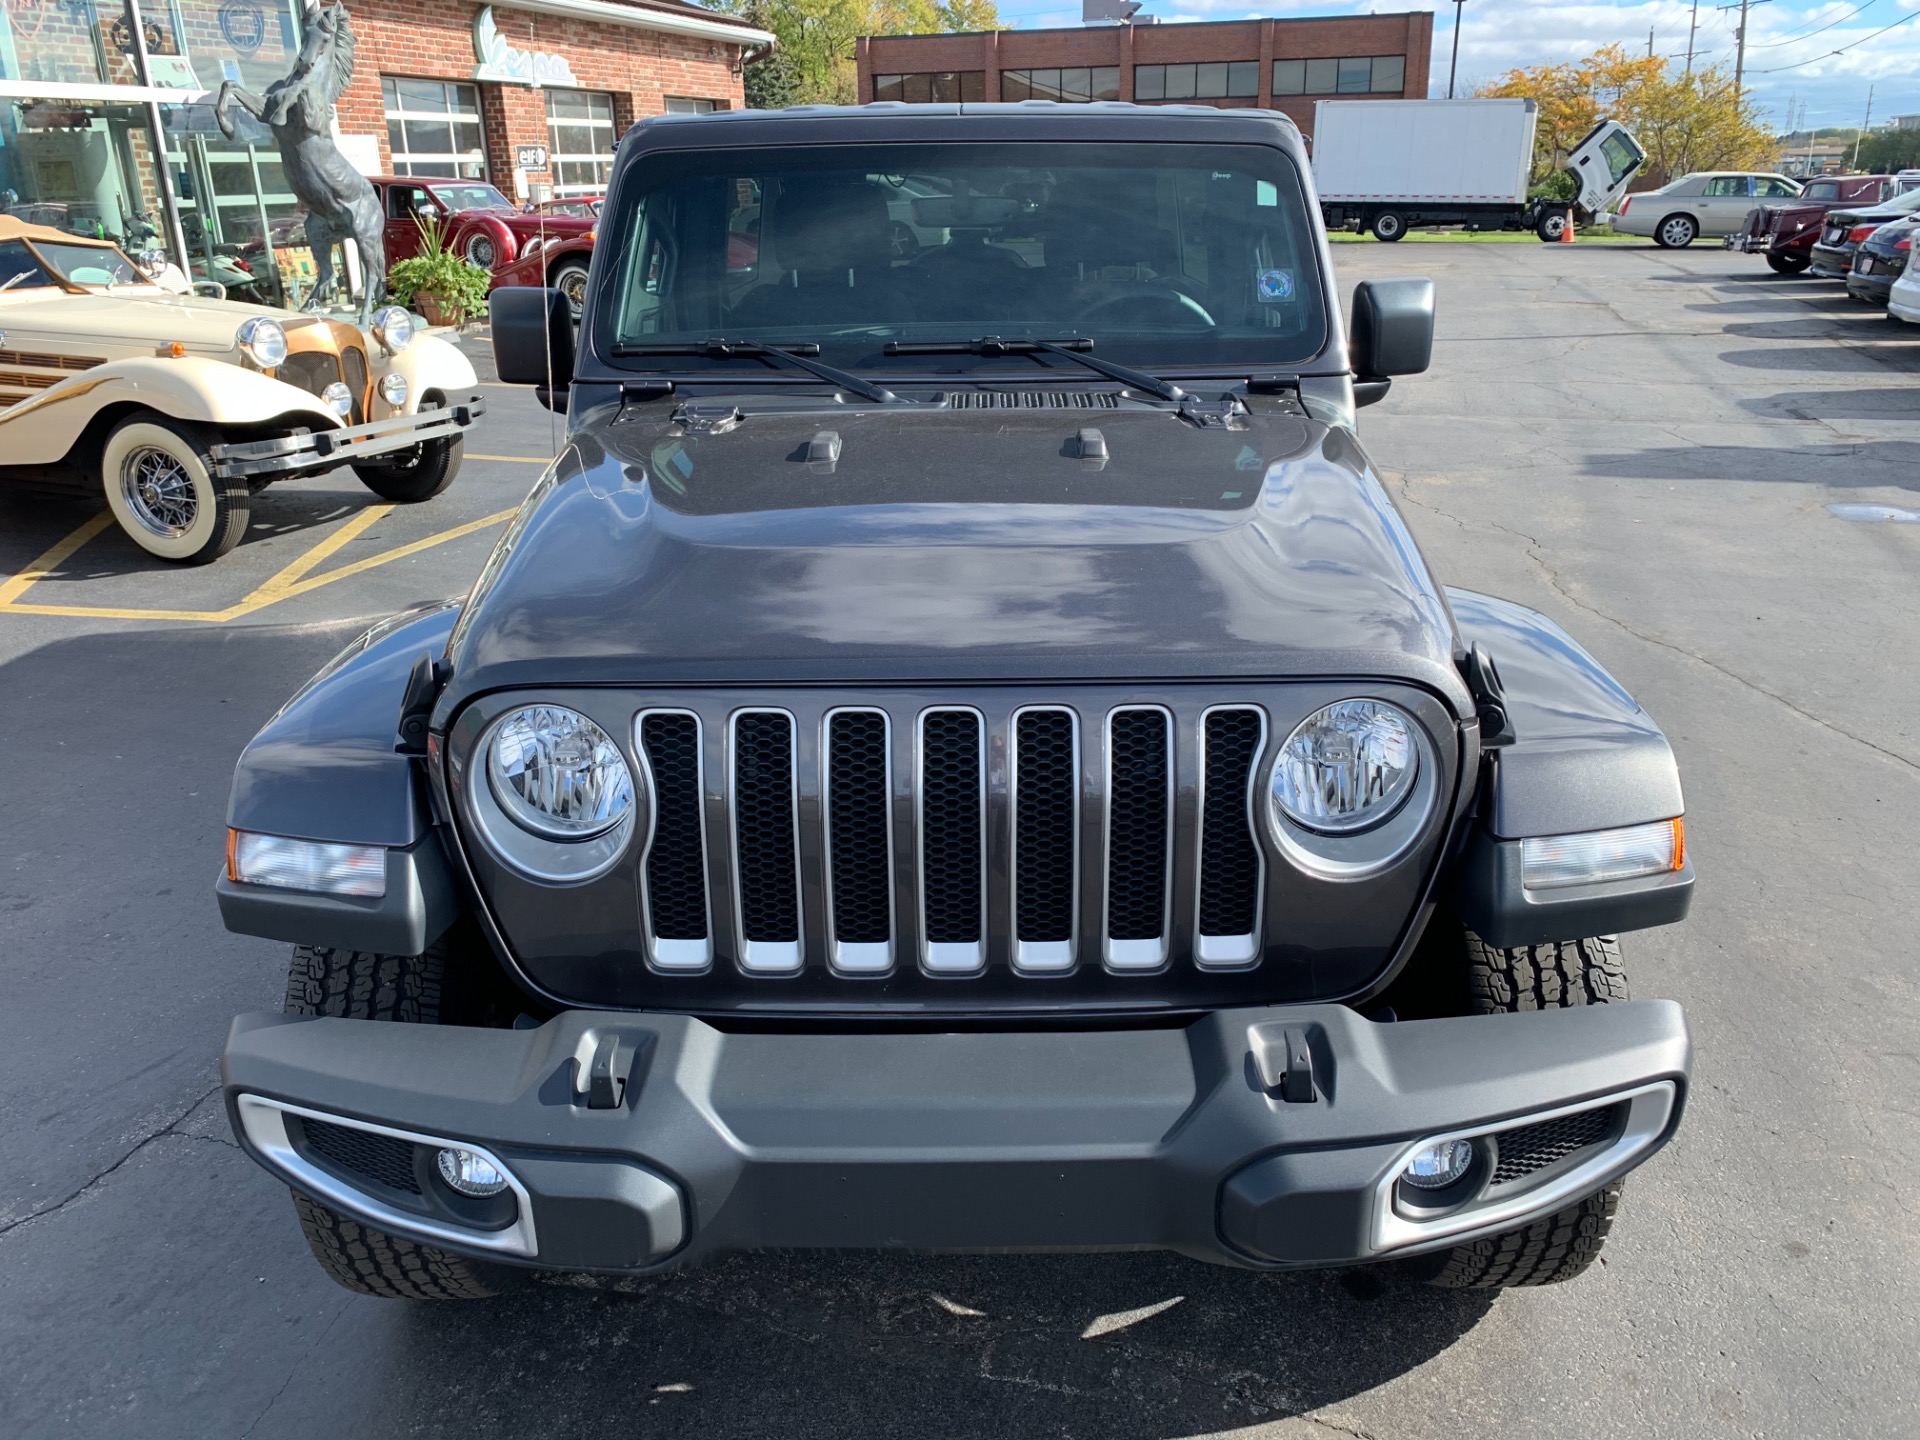 Used-2018-Jeep-Wrangler-Unlimited-Sahara-4x4